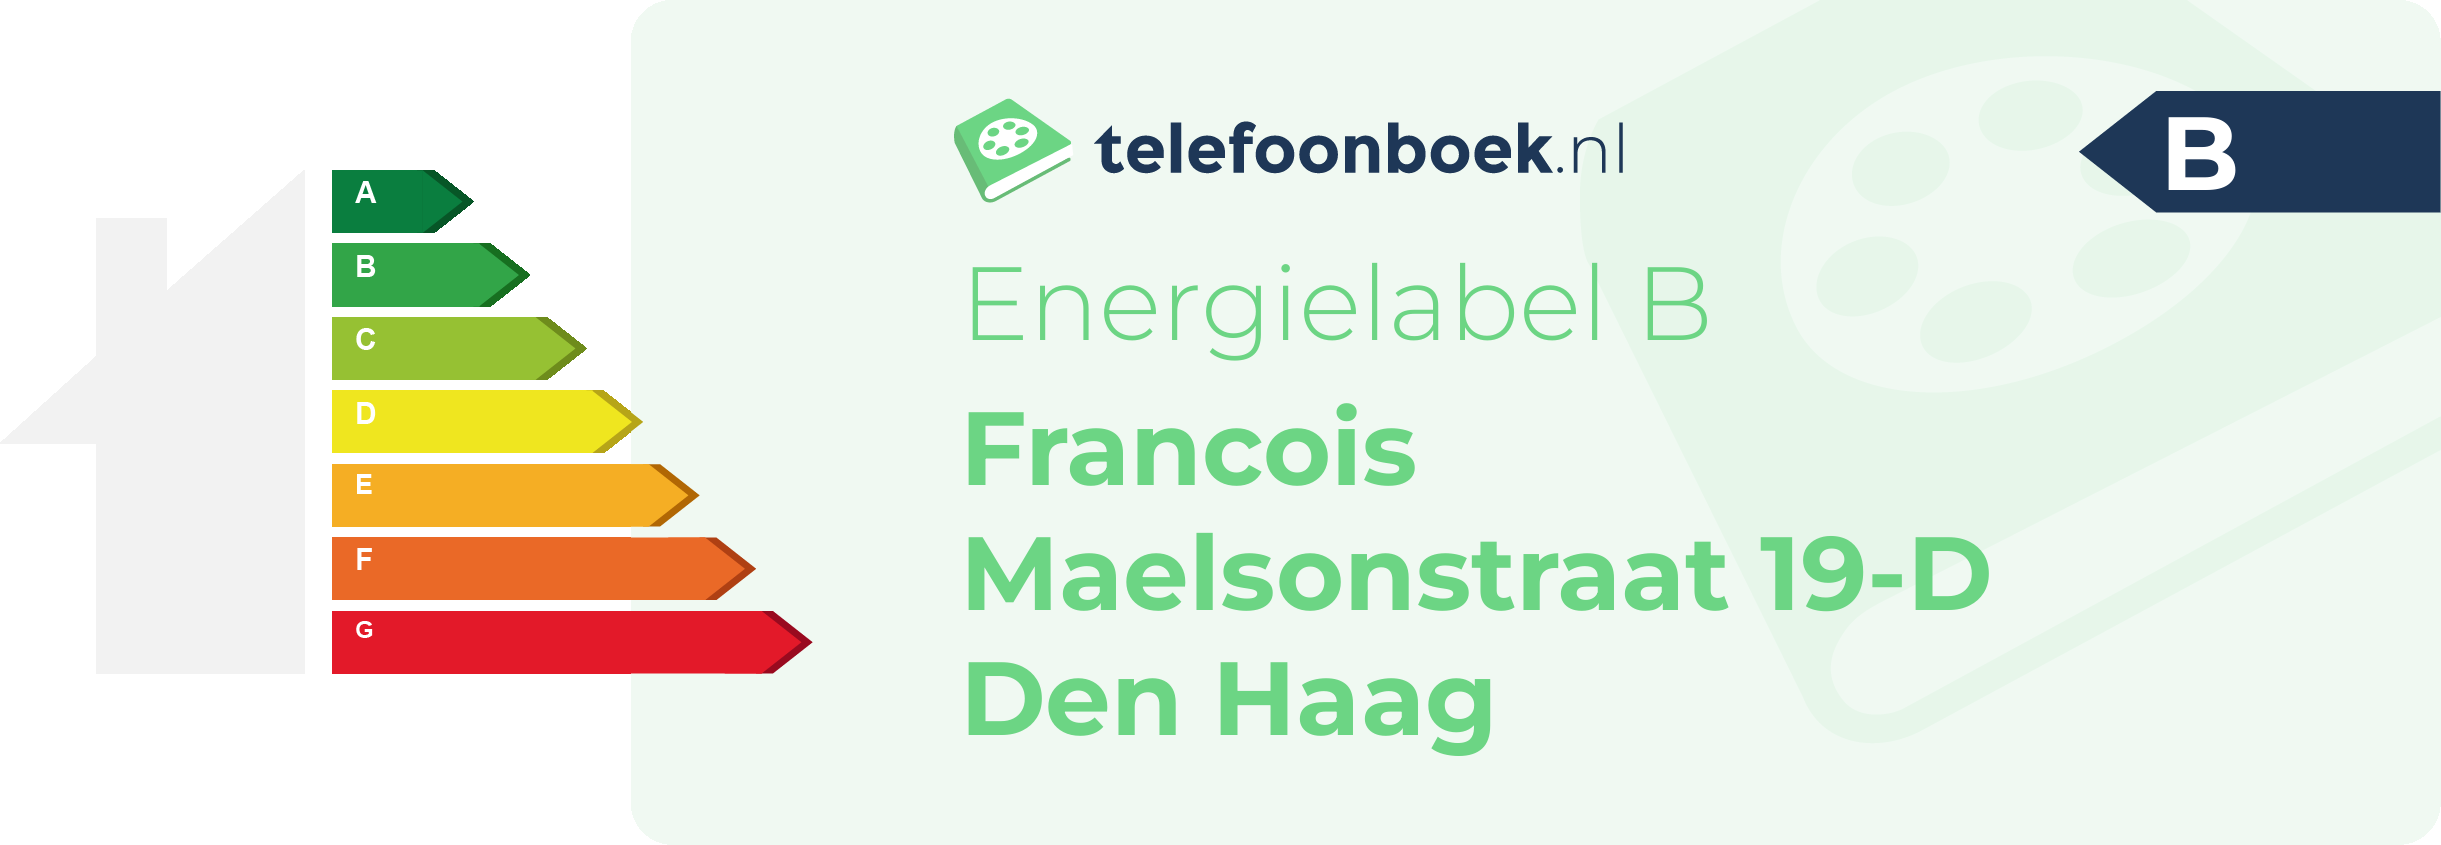 Energielabel Francois Maelsonstraat 19-D Den Haag